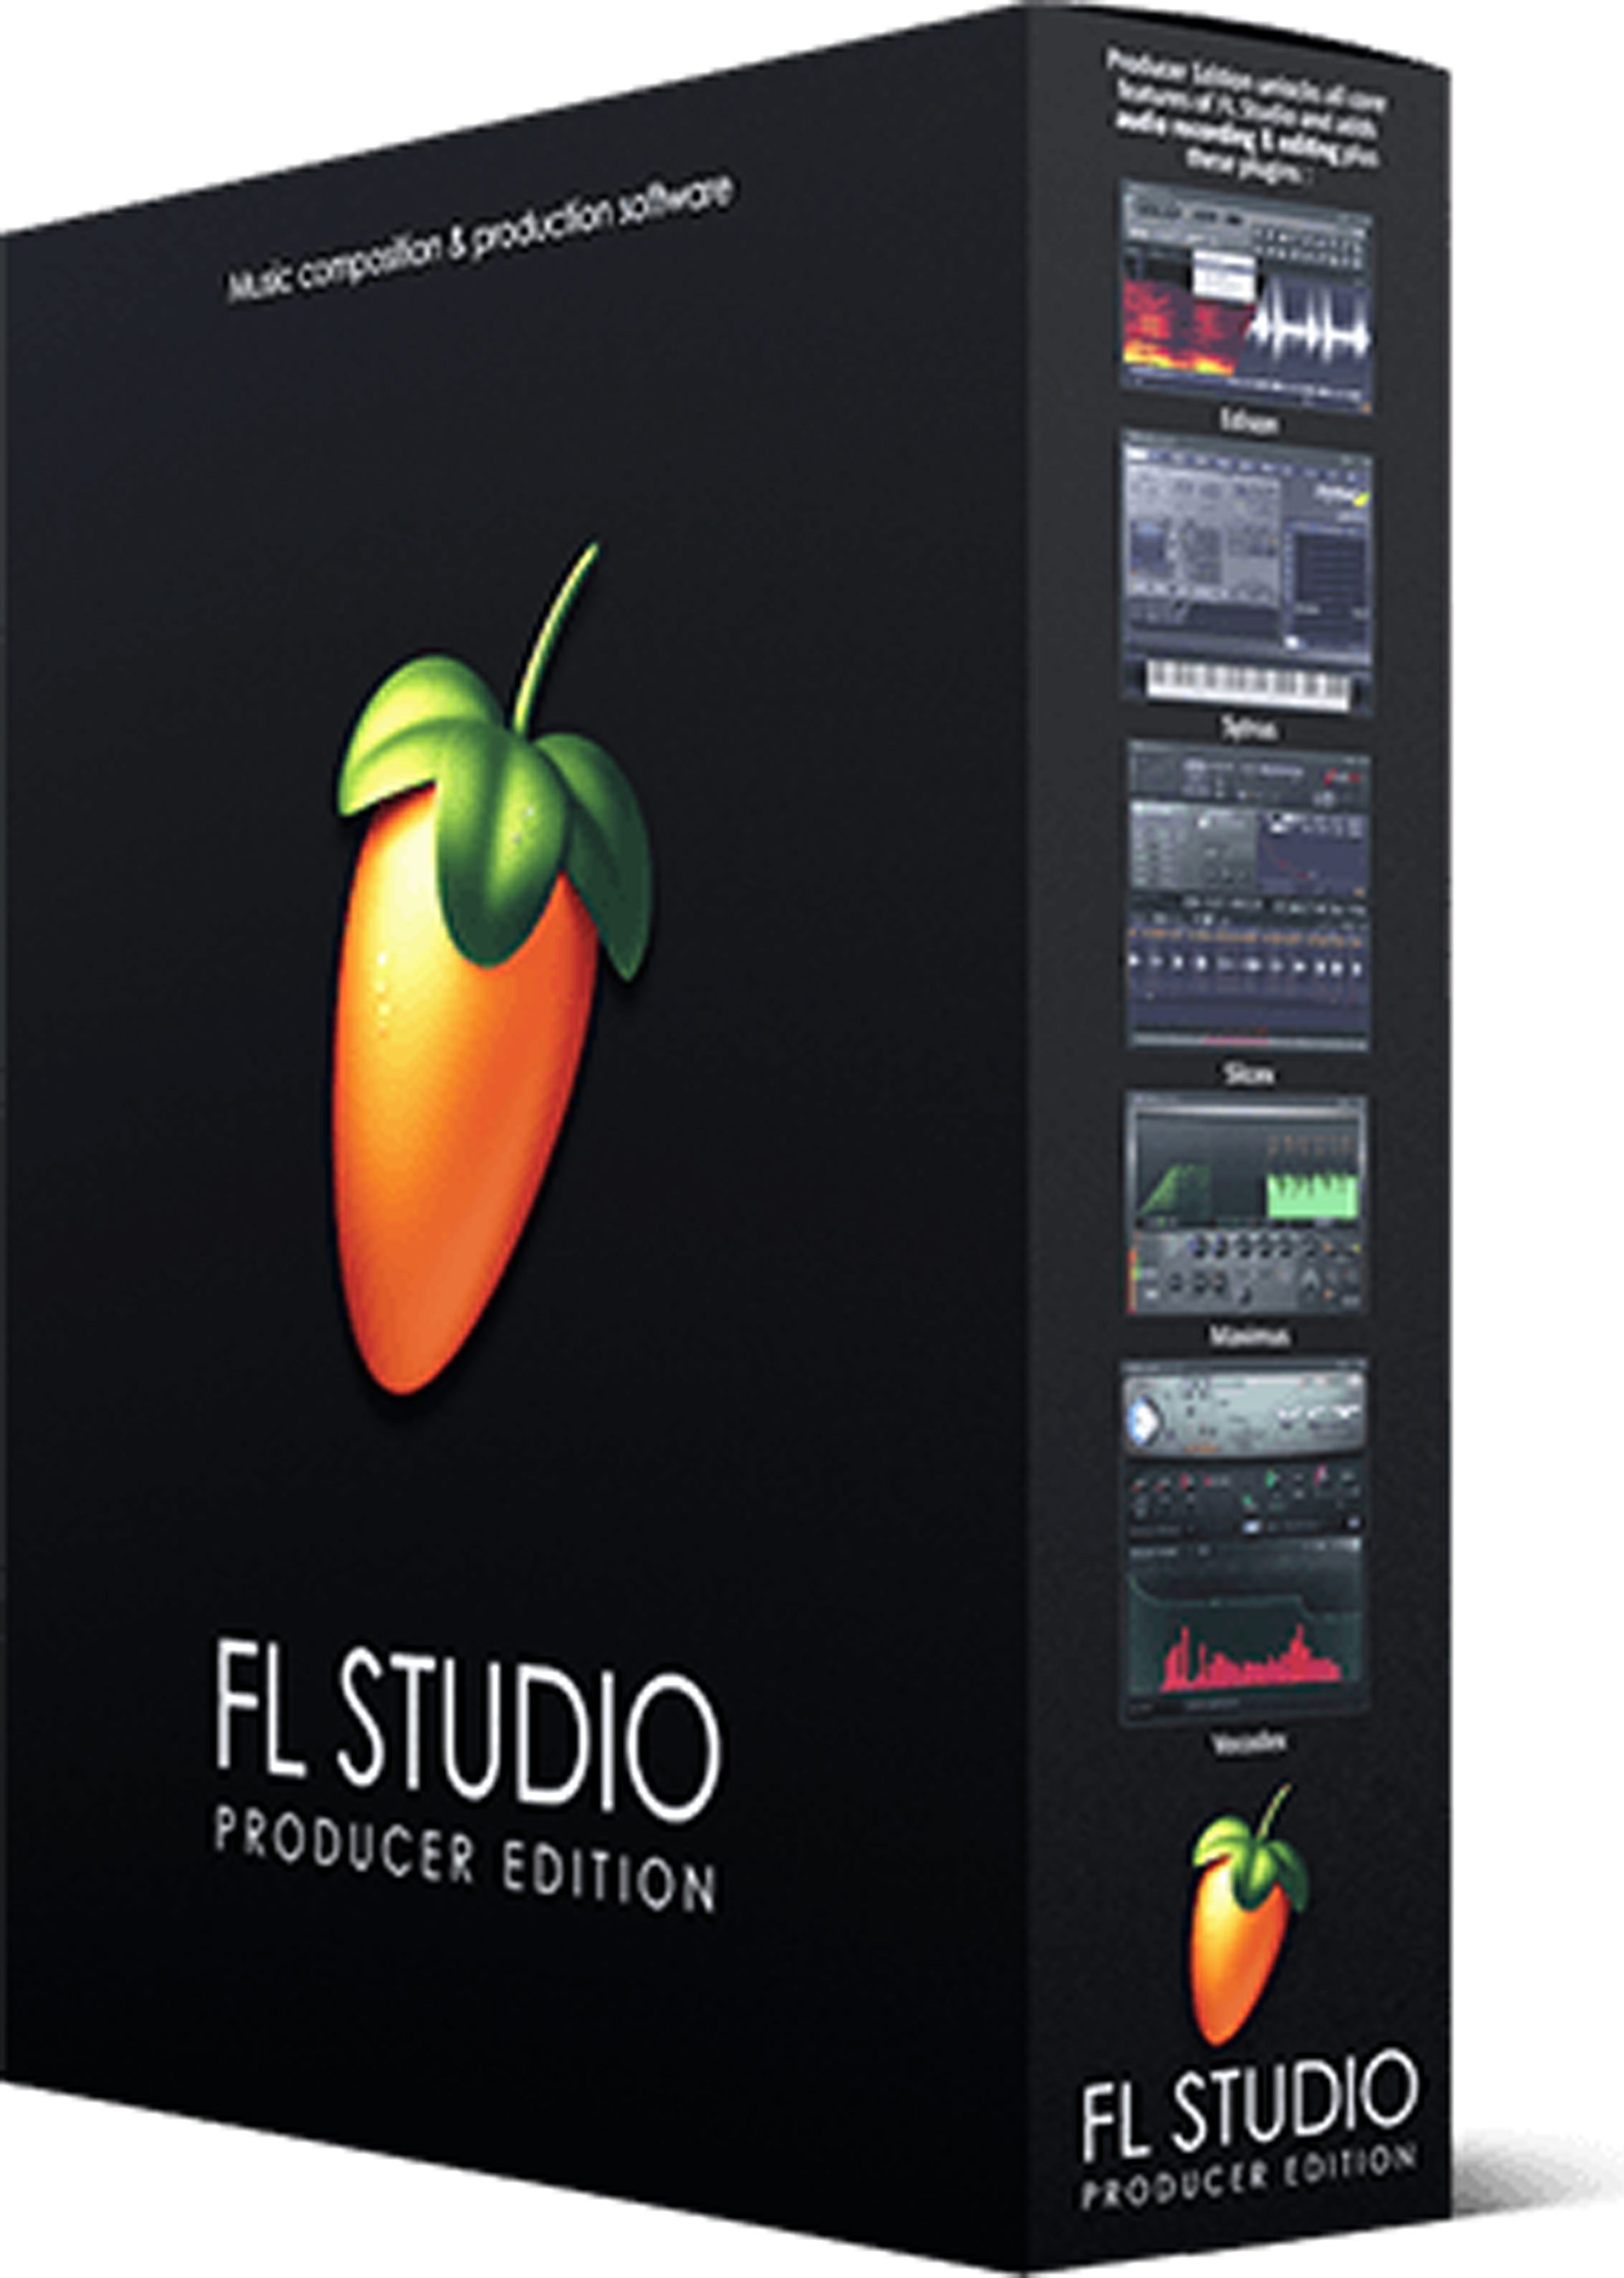 fl studio free download full version for mac